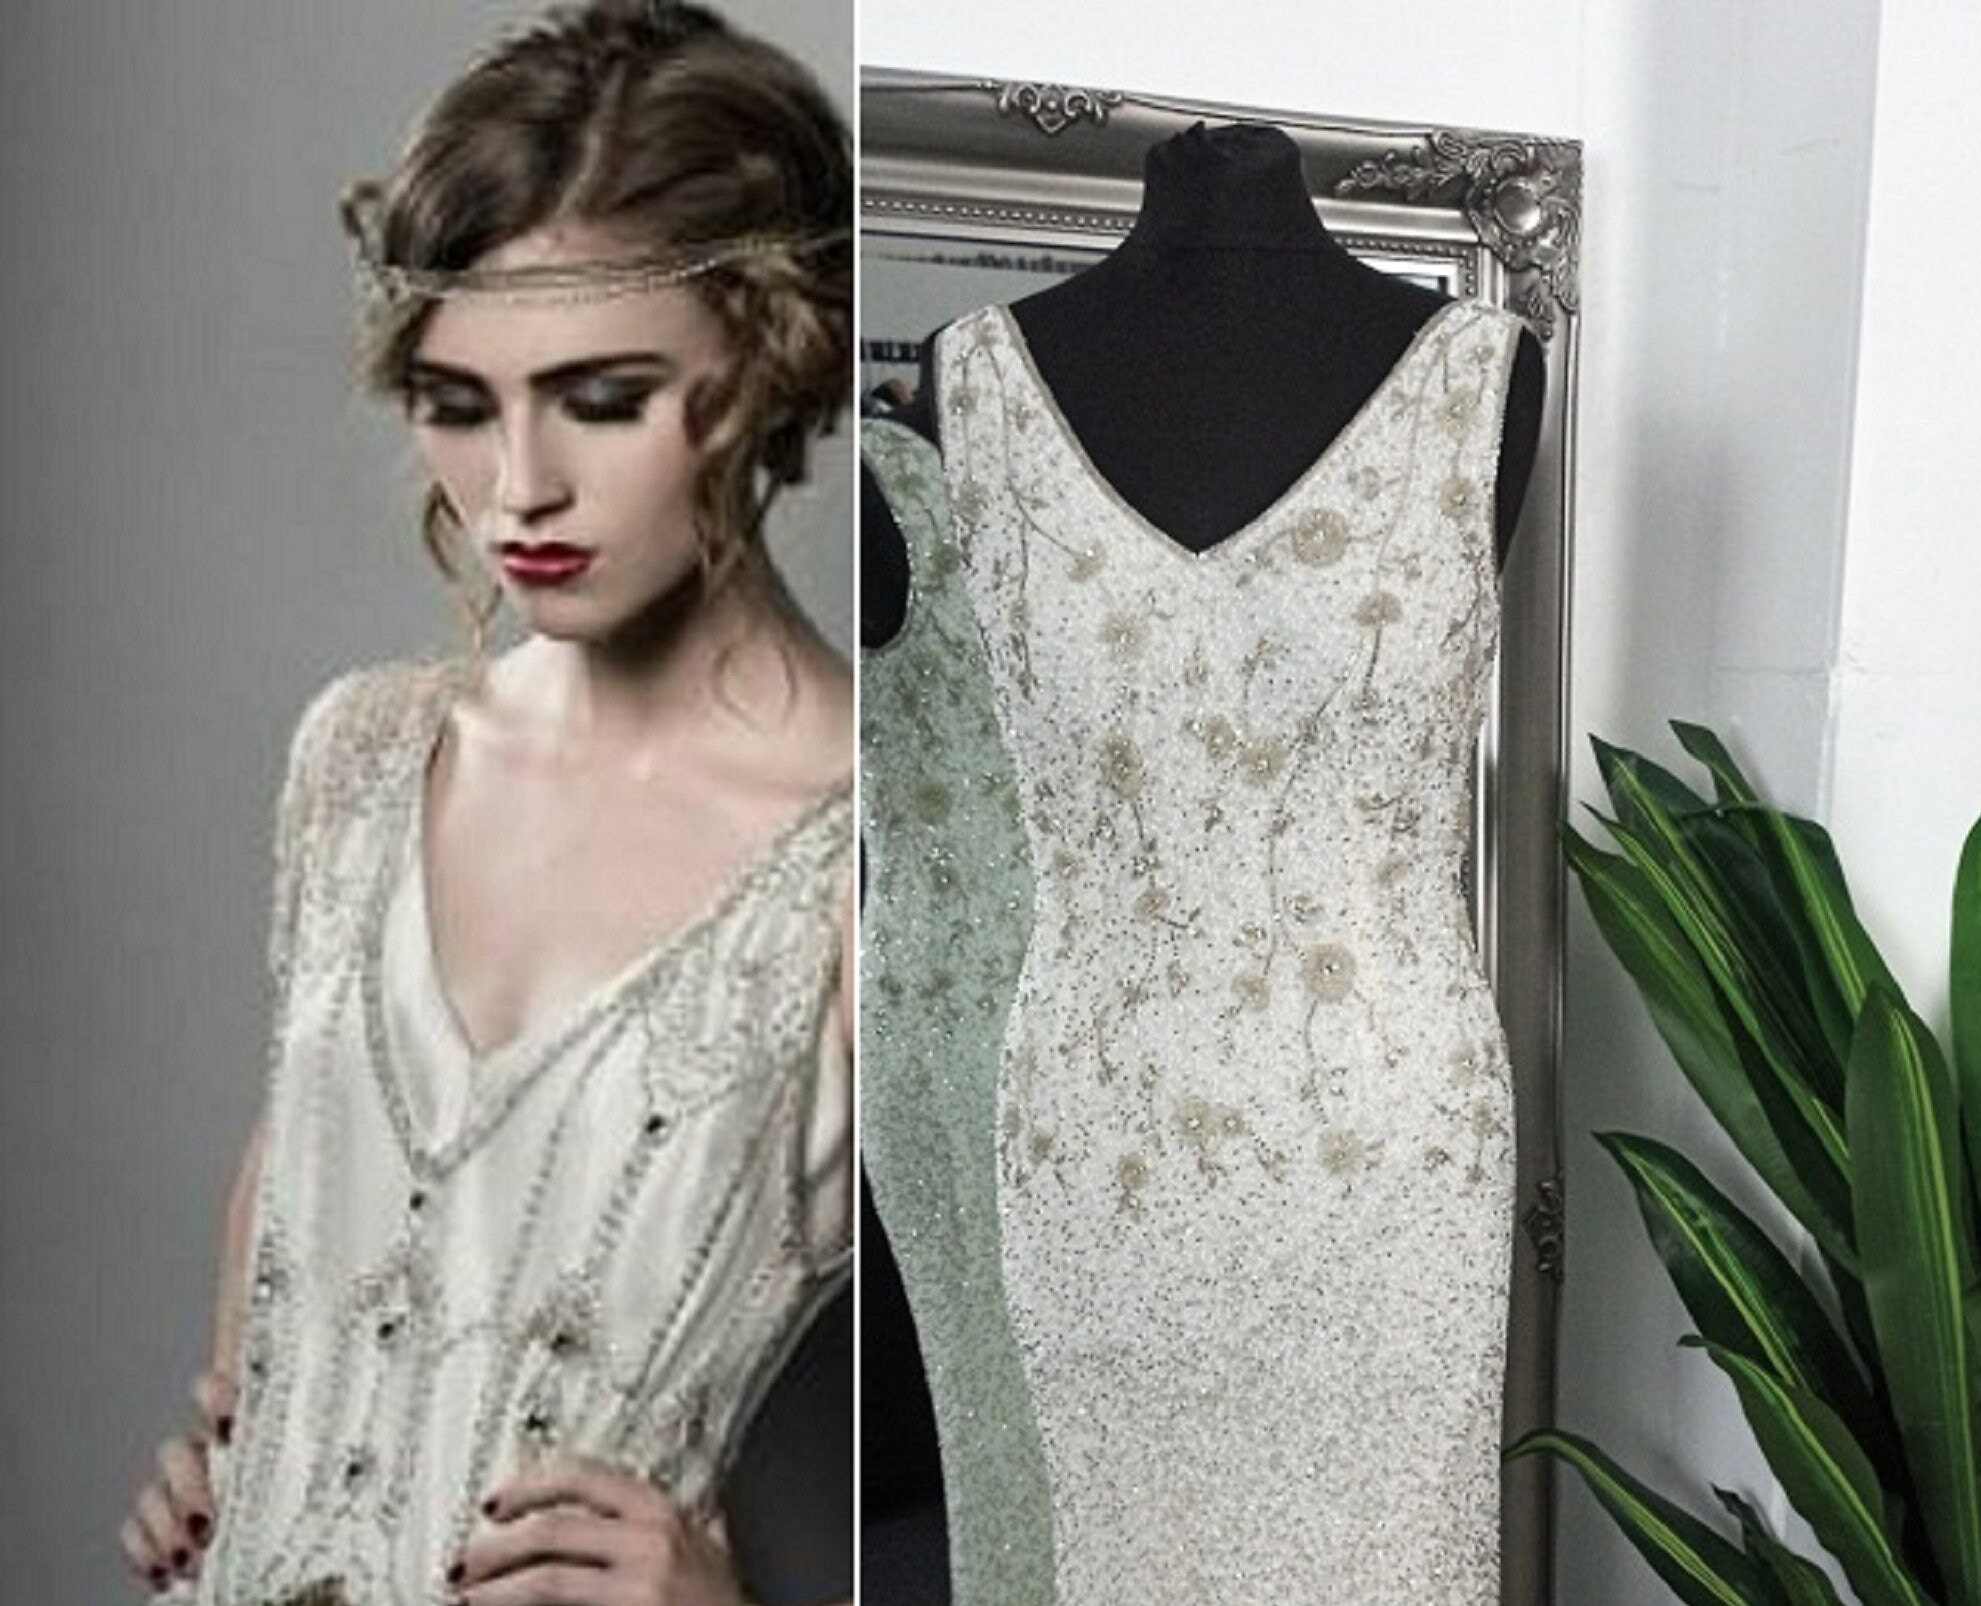 Rhinestone FLAPPER Cleopatra 1920s Wedding Dress Beaded Lace 1920s